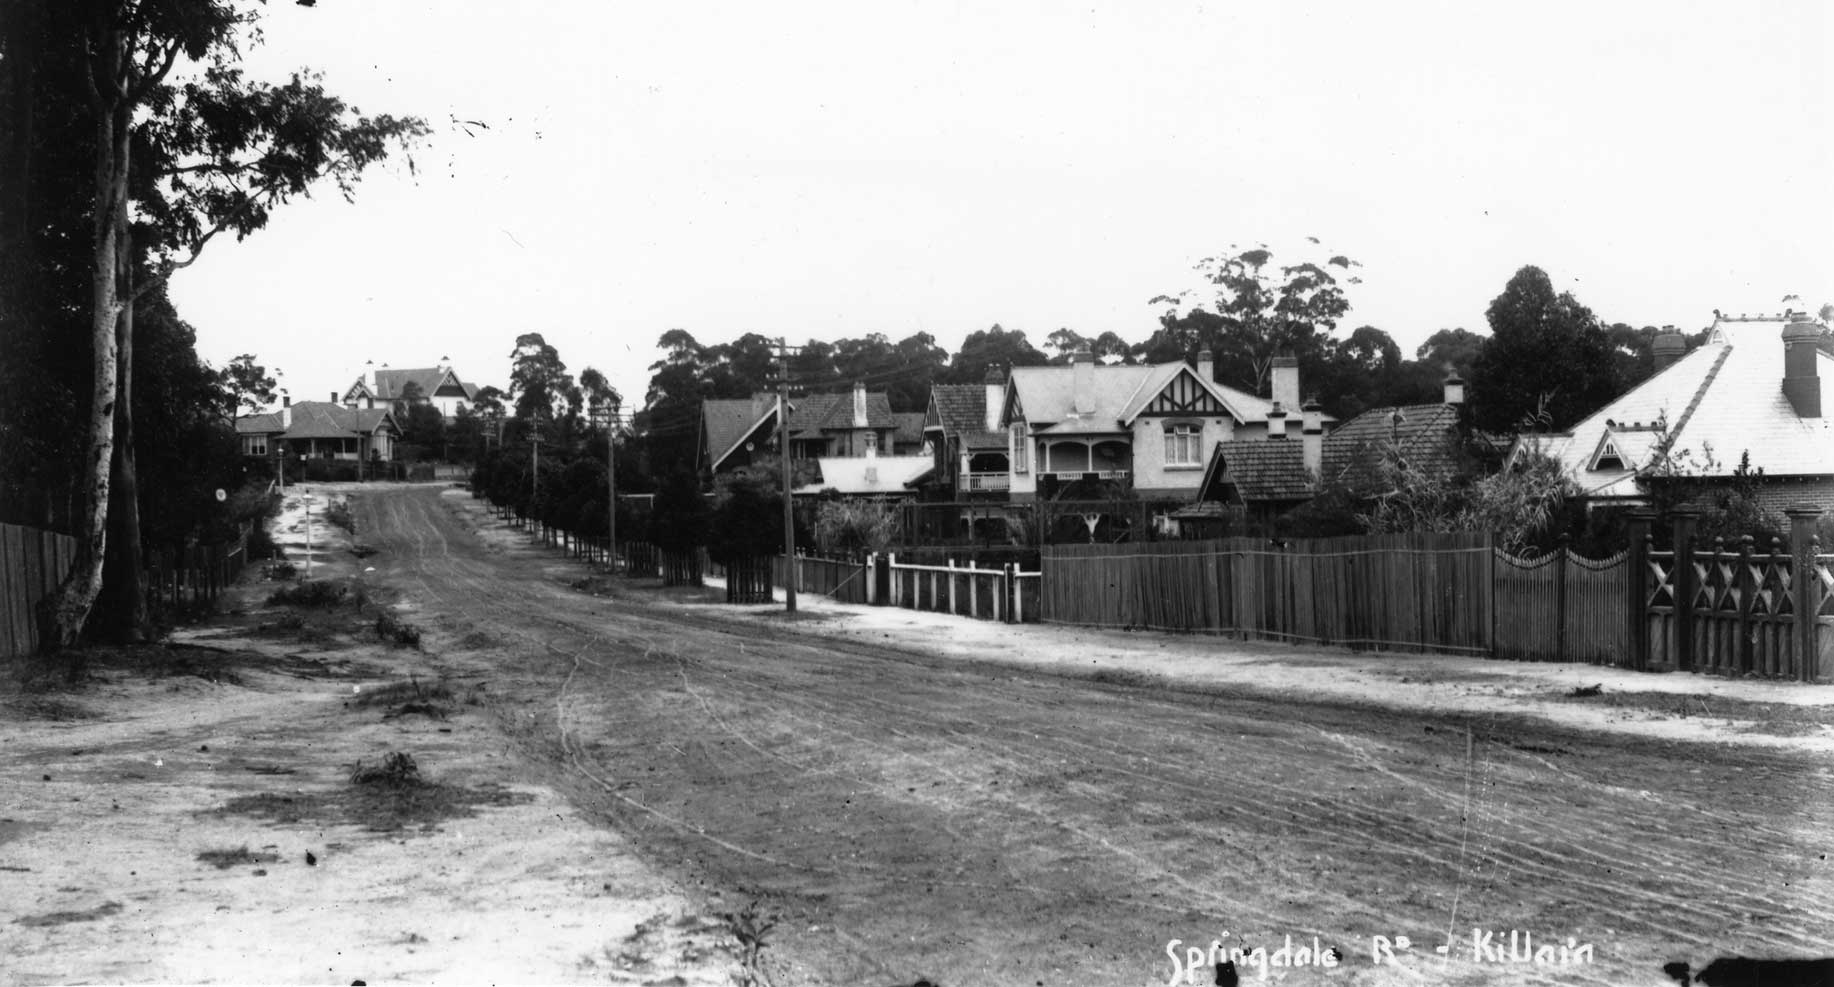 Monochrome photo of Springdale Road, Killara, circa 1900